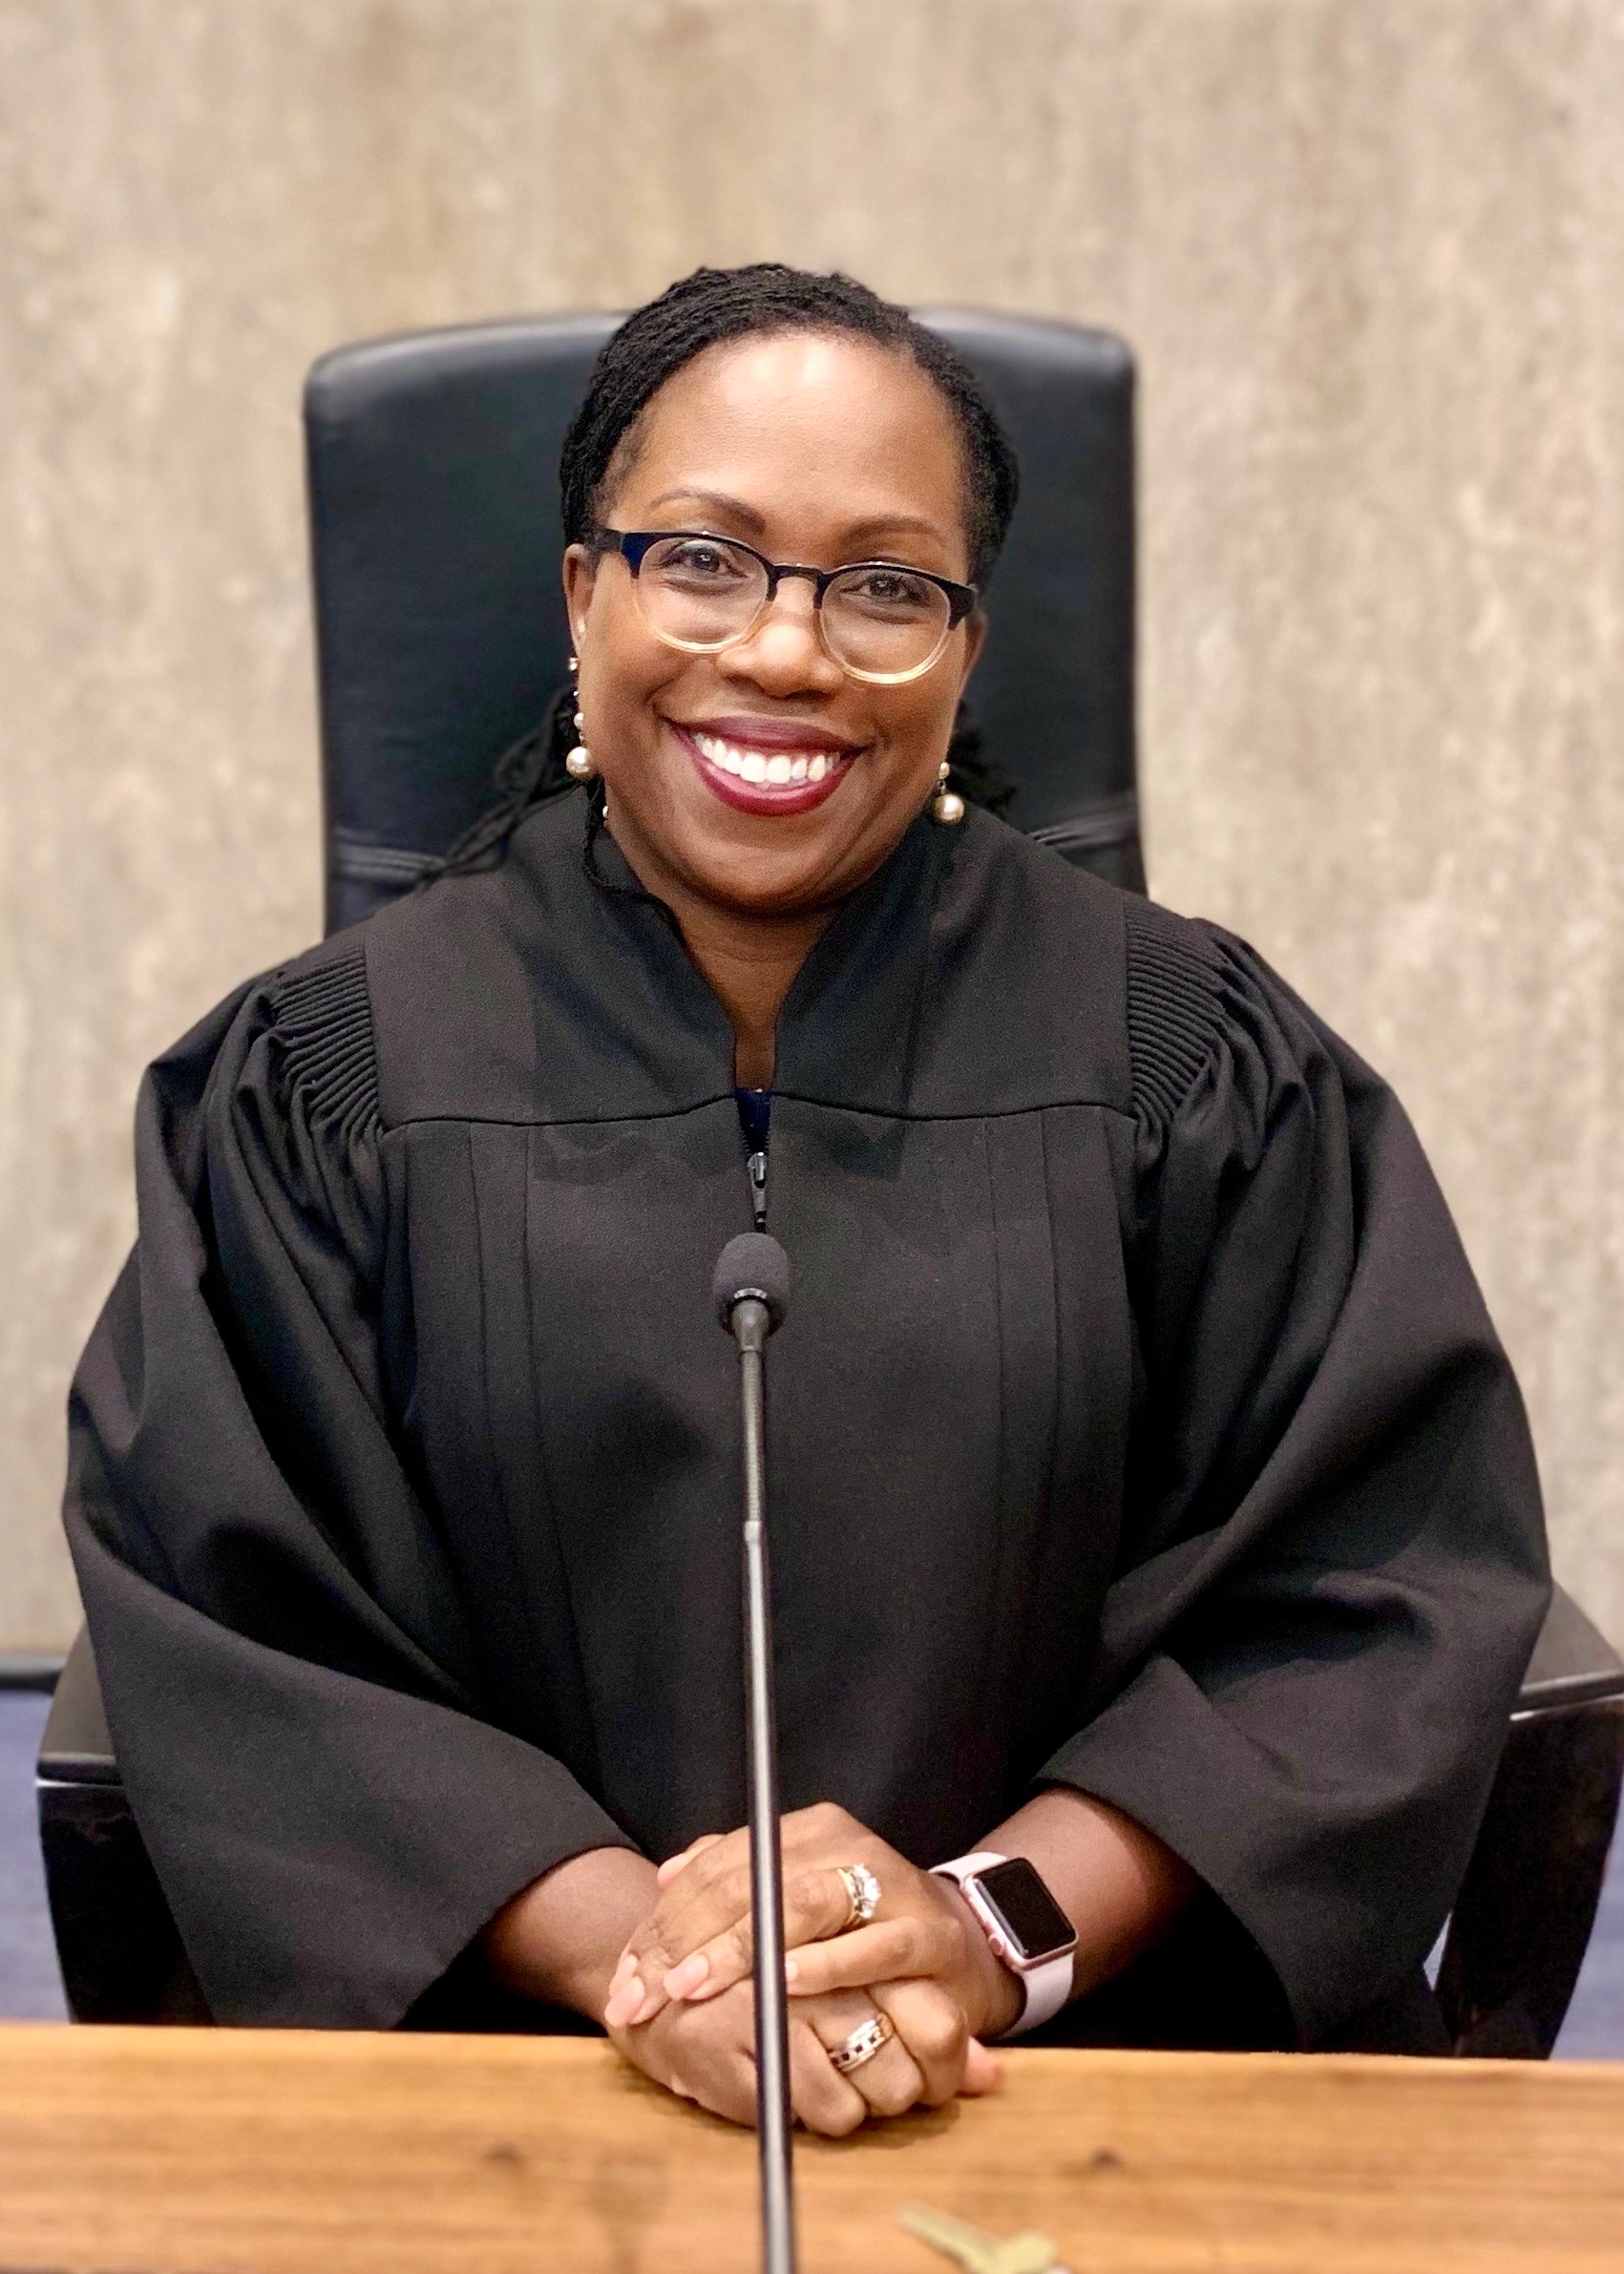 Ketanji Brown Jackson sits in her judge's robes.